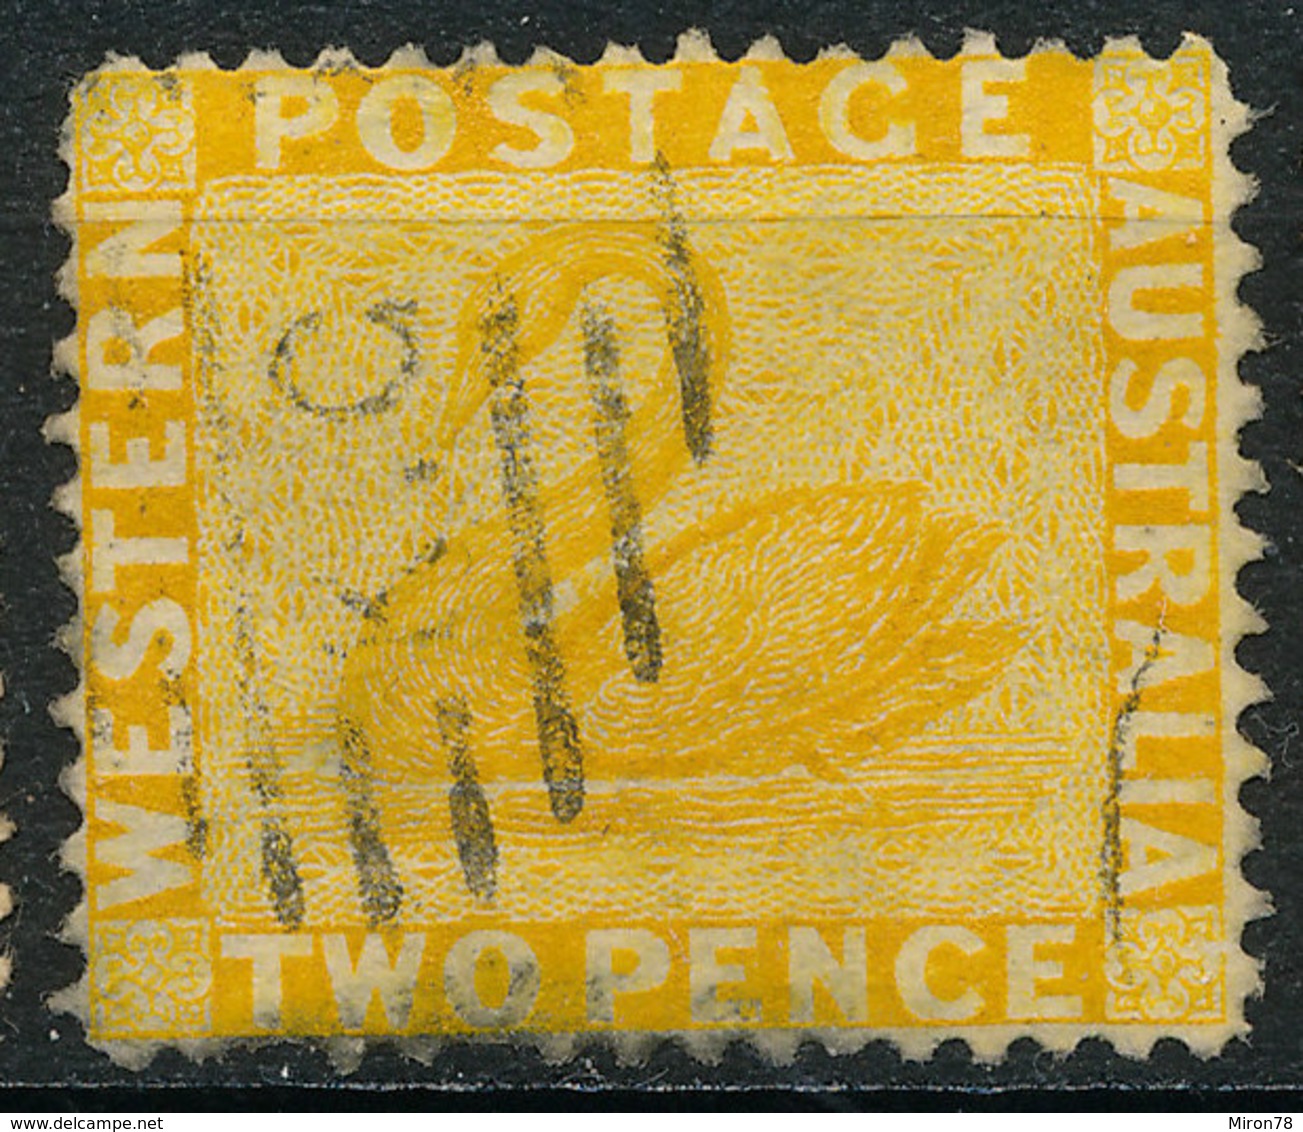 Stamp Australia 2p Used Lot61 - Gebruikt